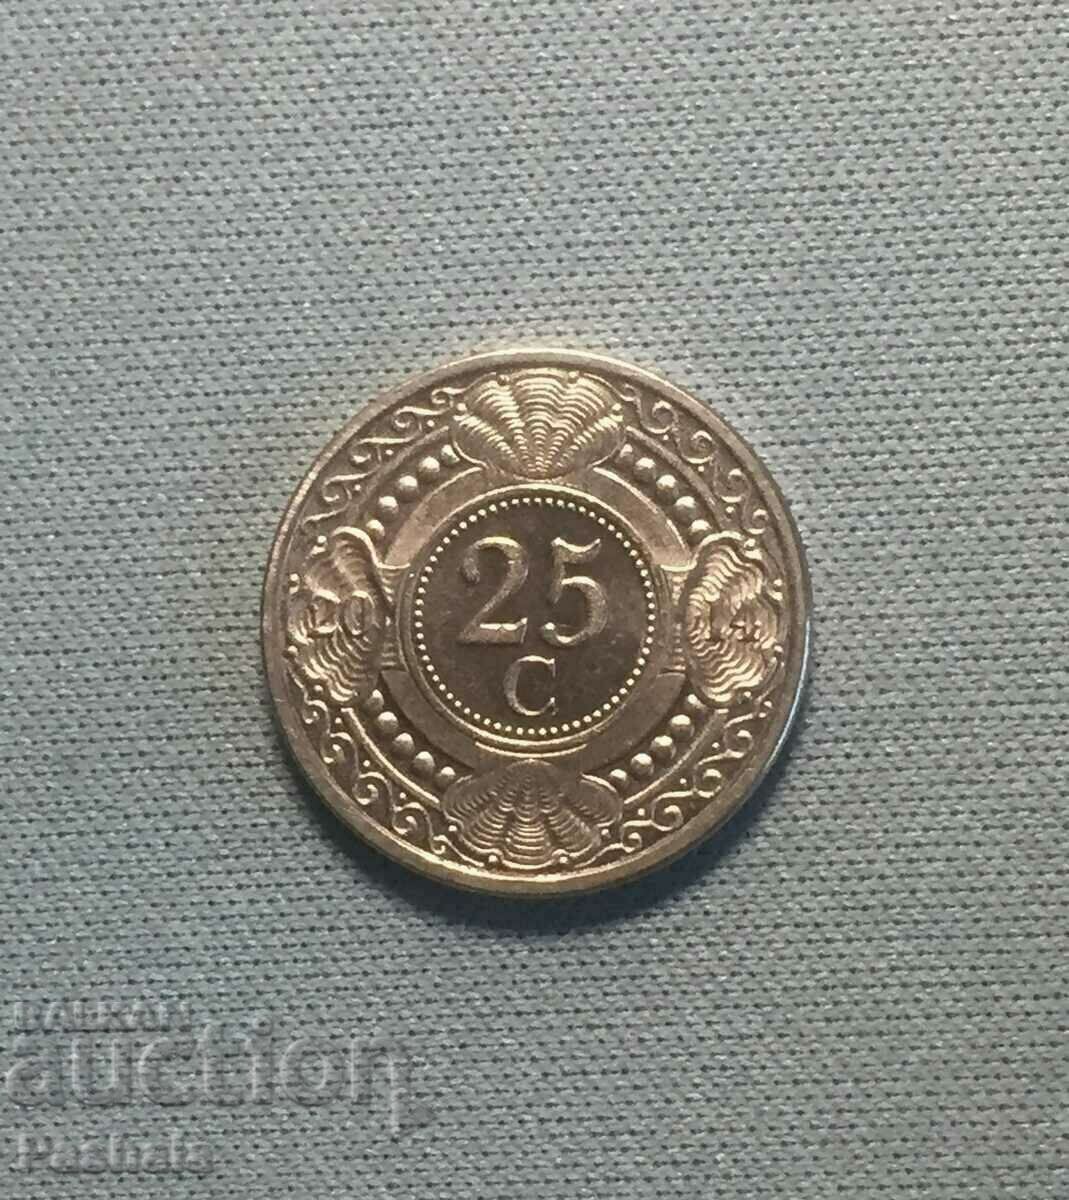 Антилски острови 25 цент 2014 г.